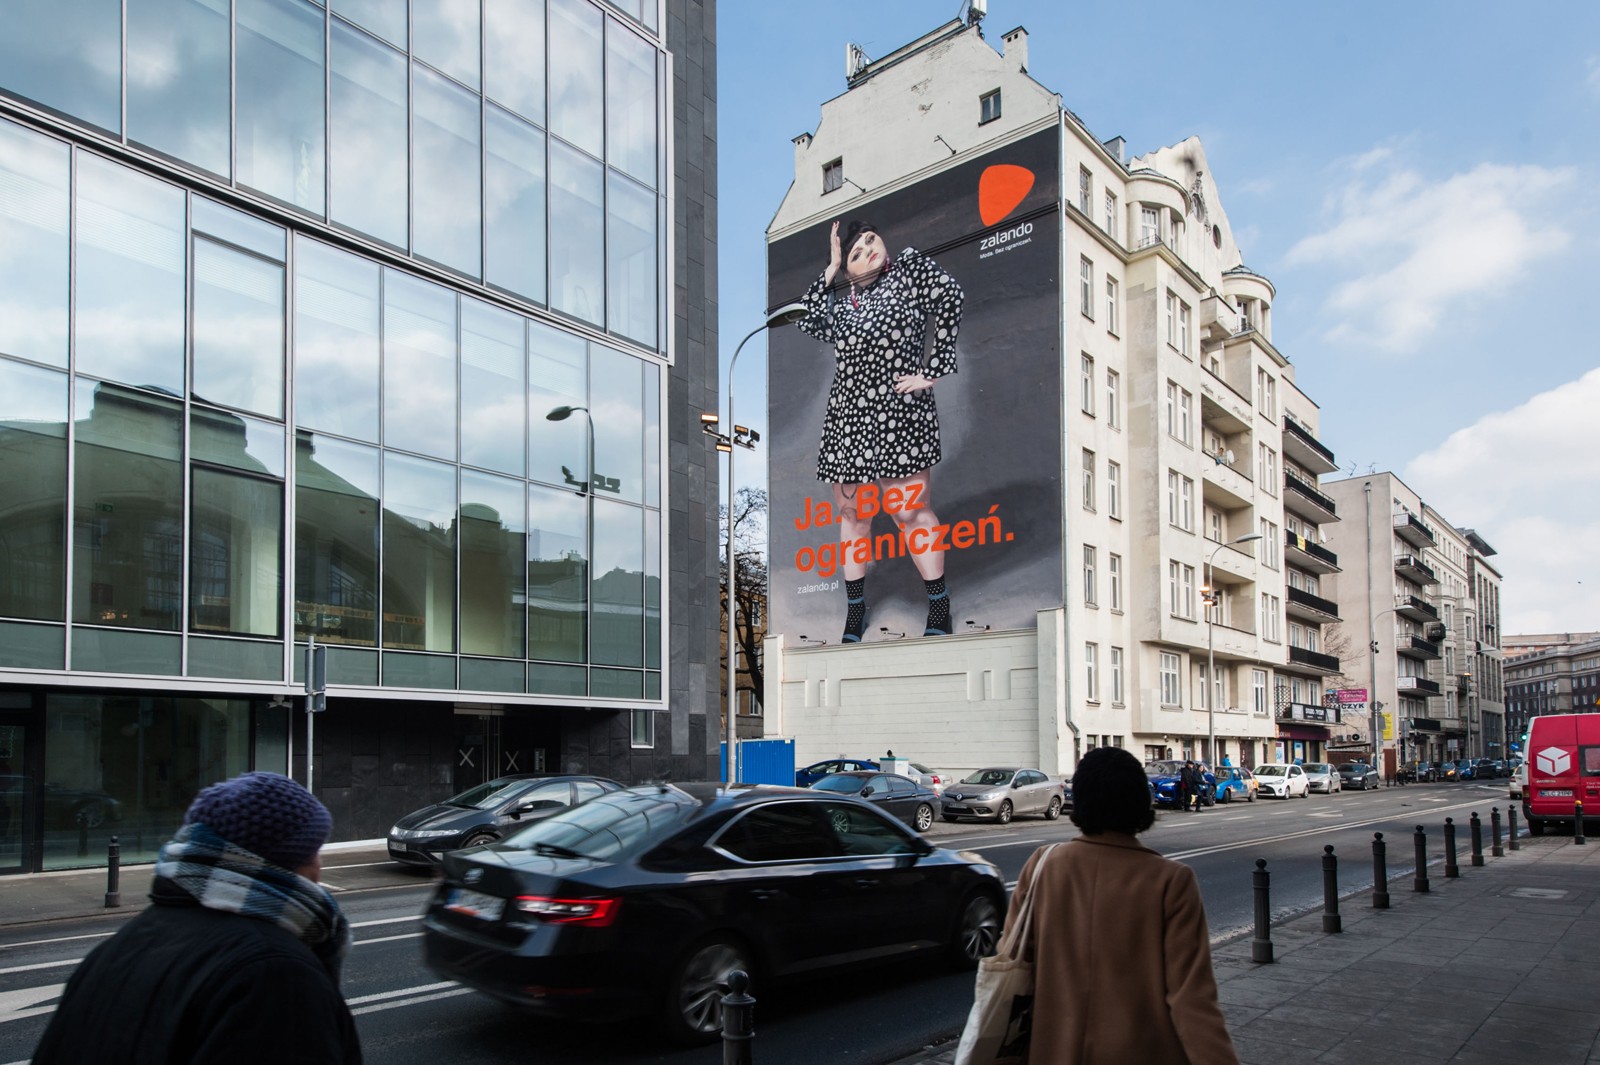 mural advertising campaign ja.bez ograniczeń for zelando company in piekna street | Ja. Bez ograniczeń | Portfolio